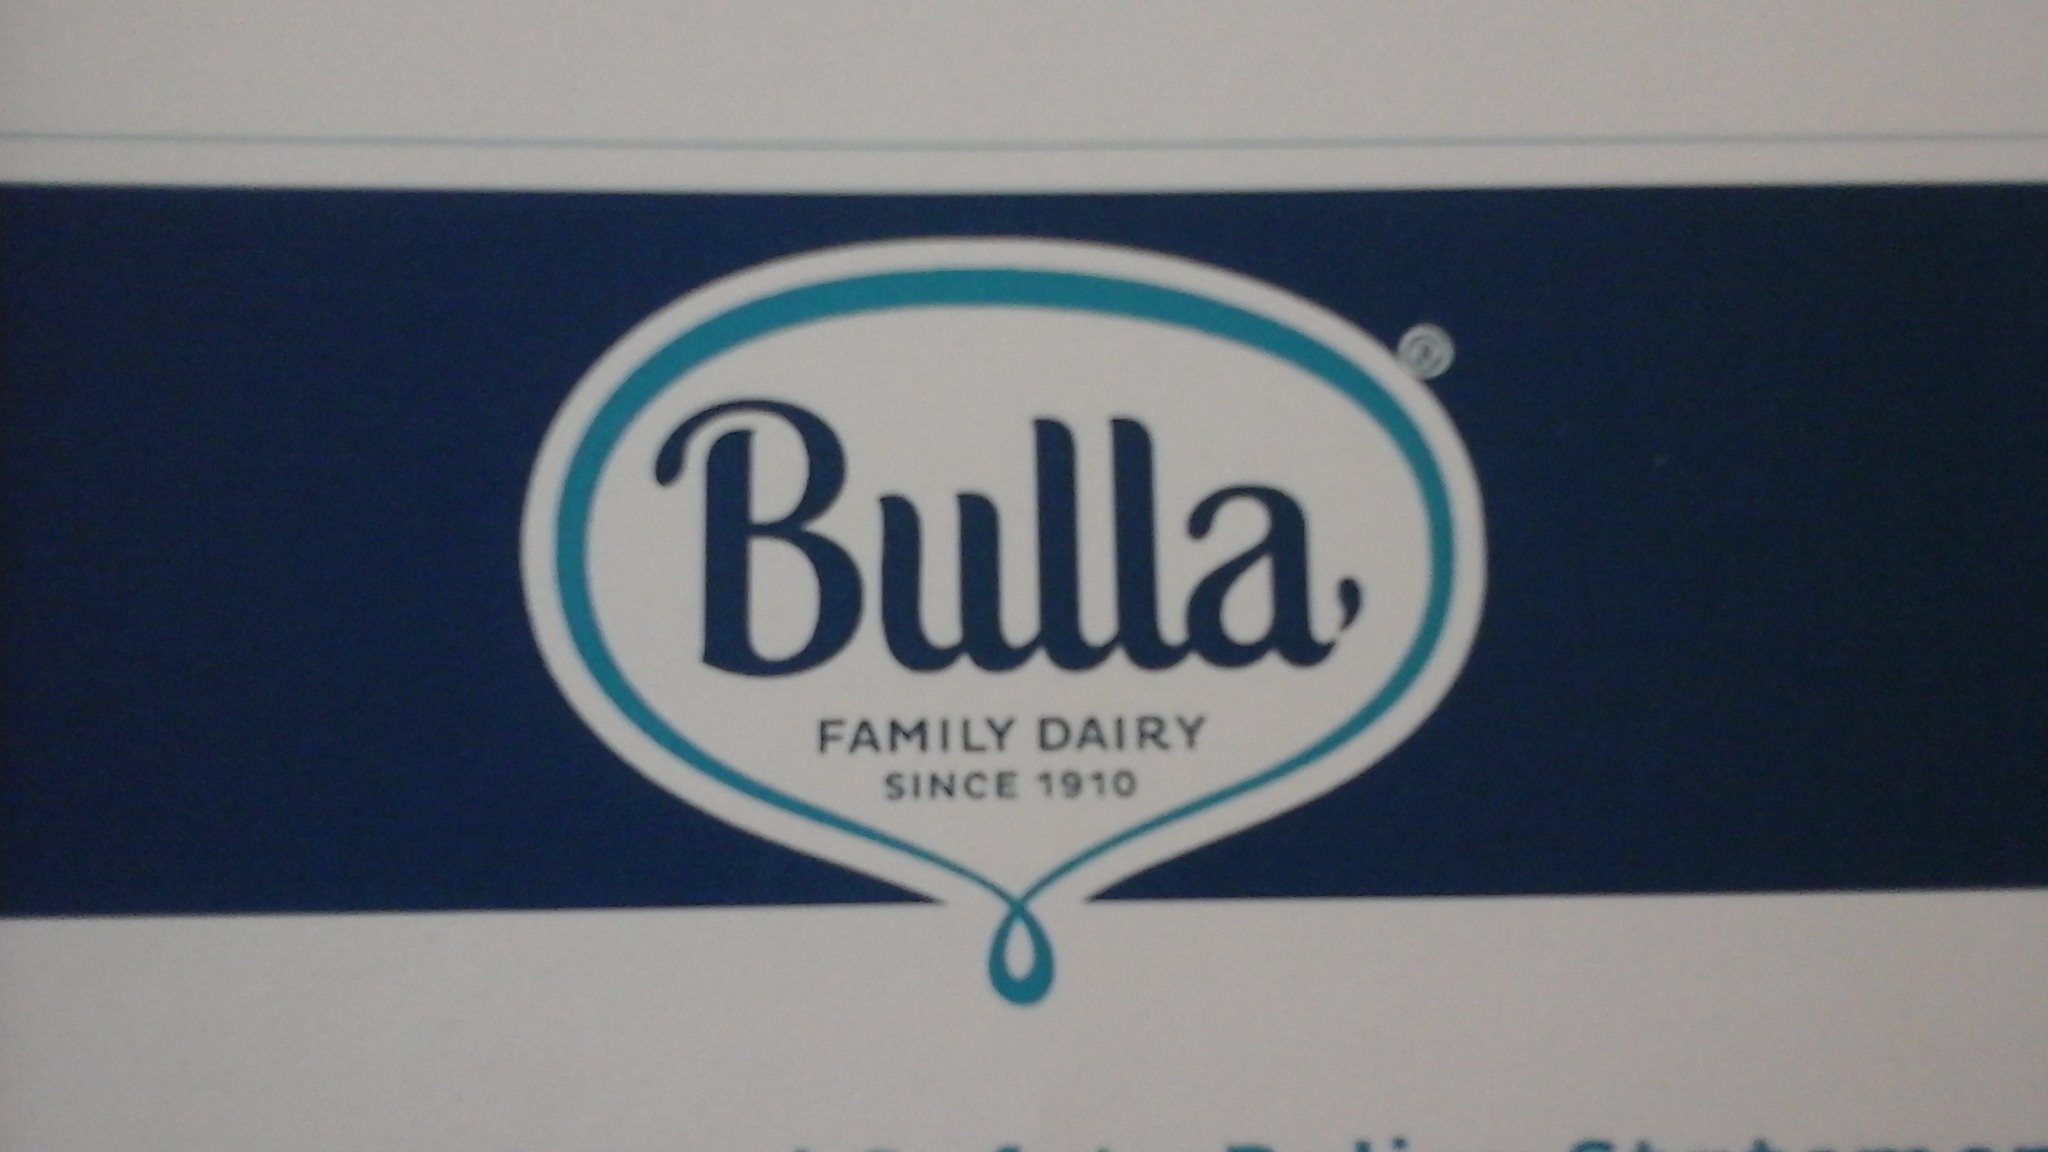 Bulla Family Dairy Farm Quality Assurance